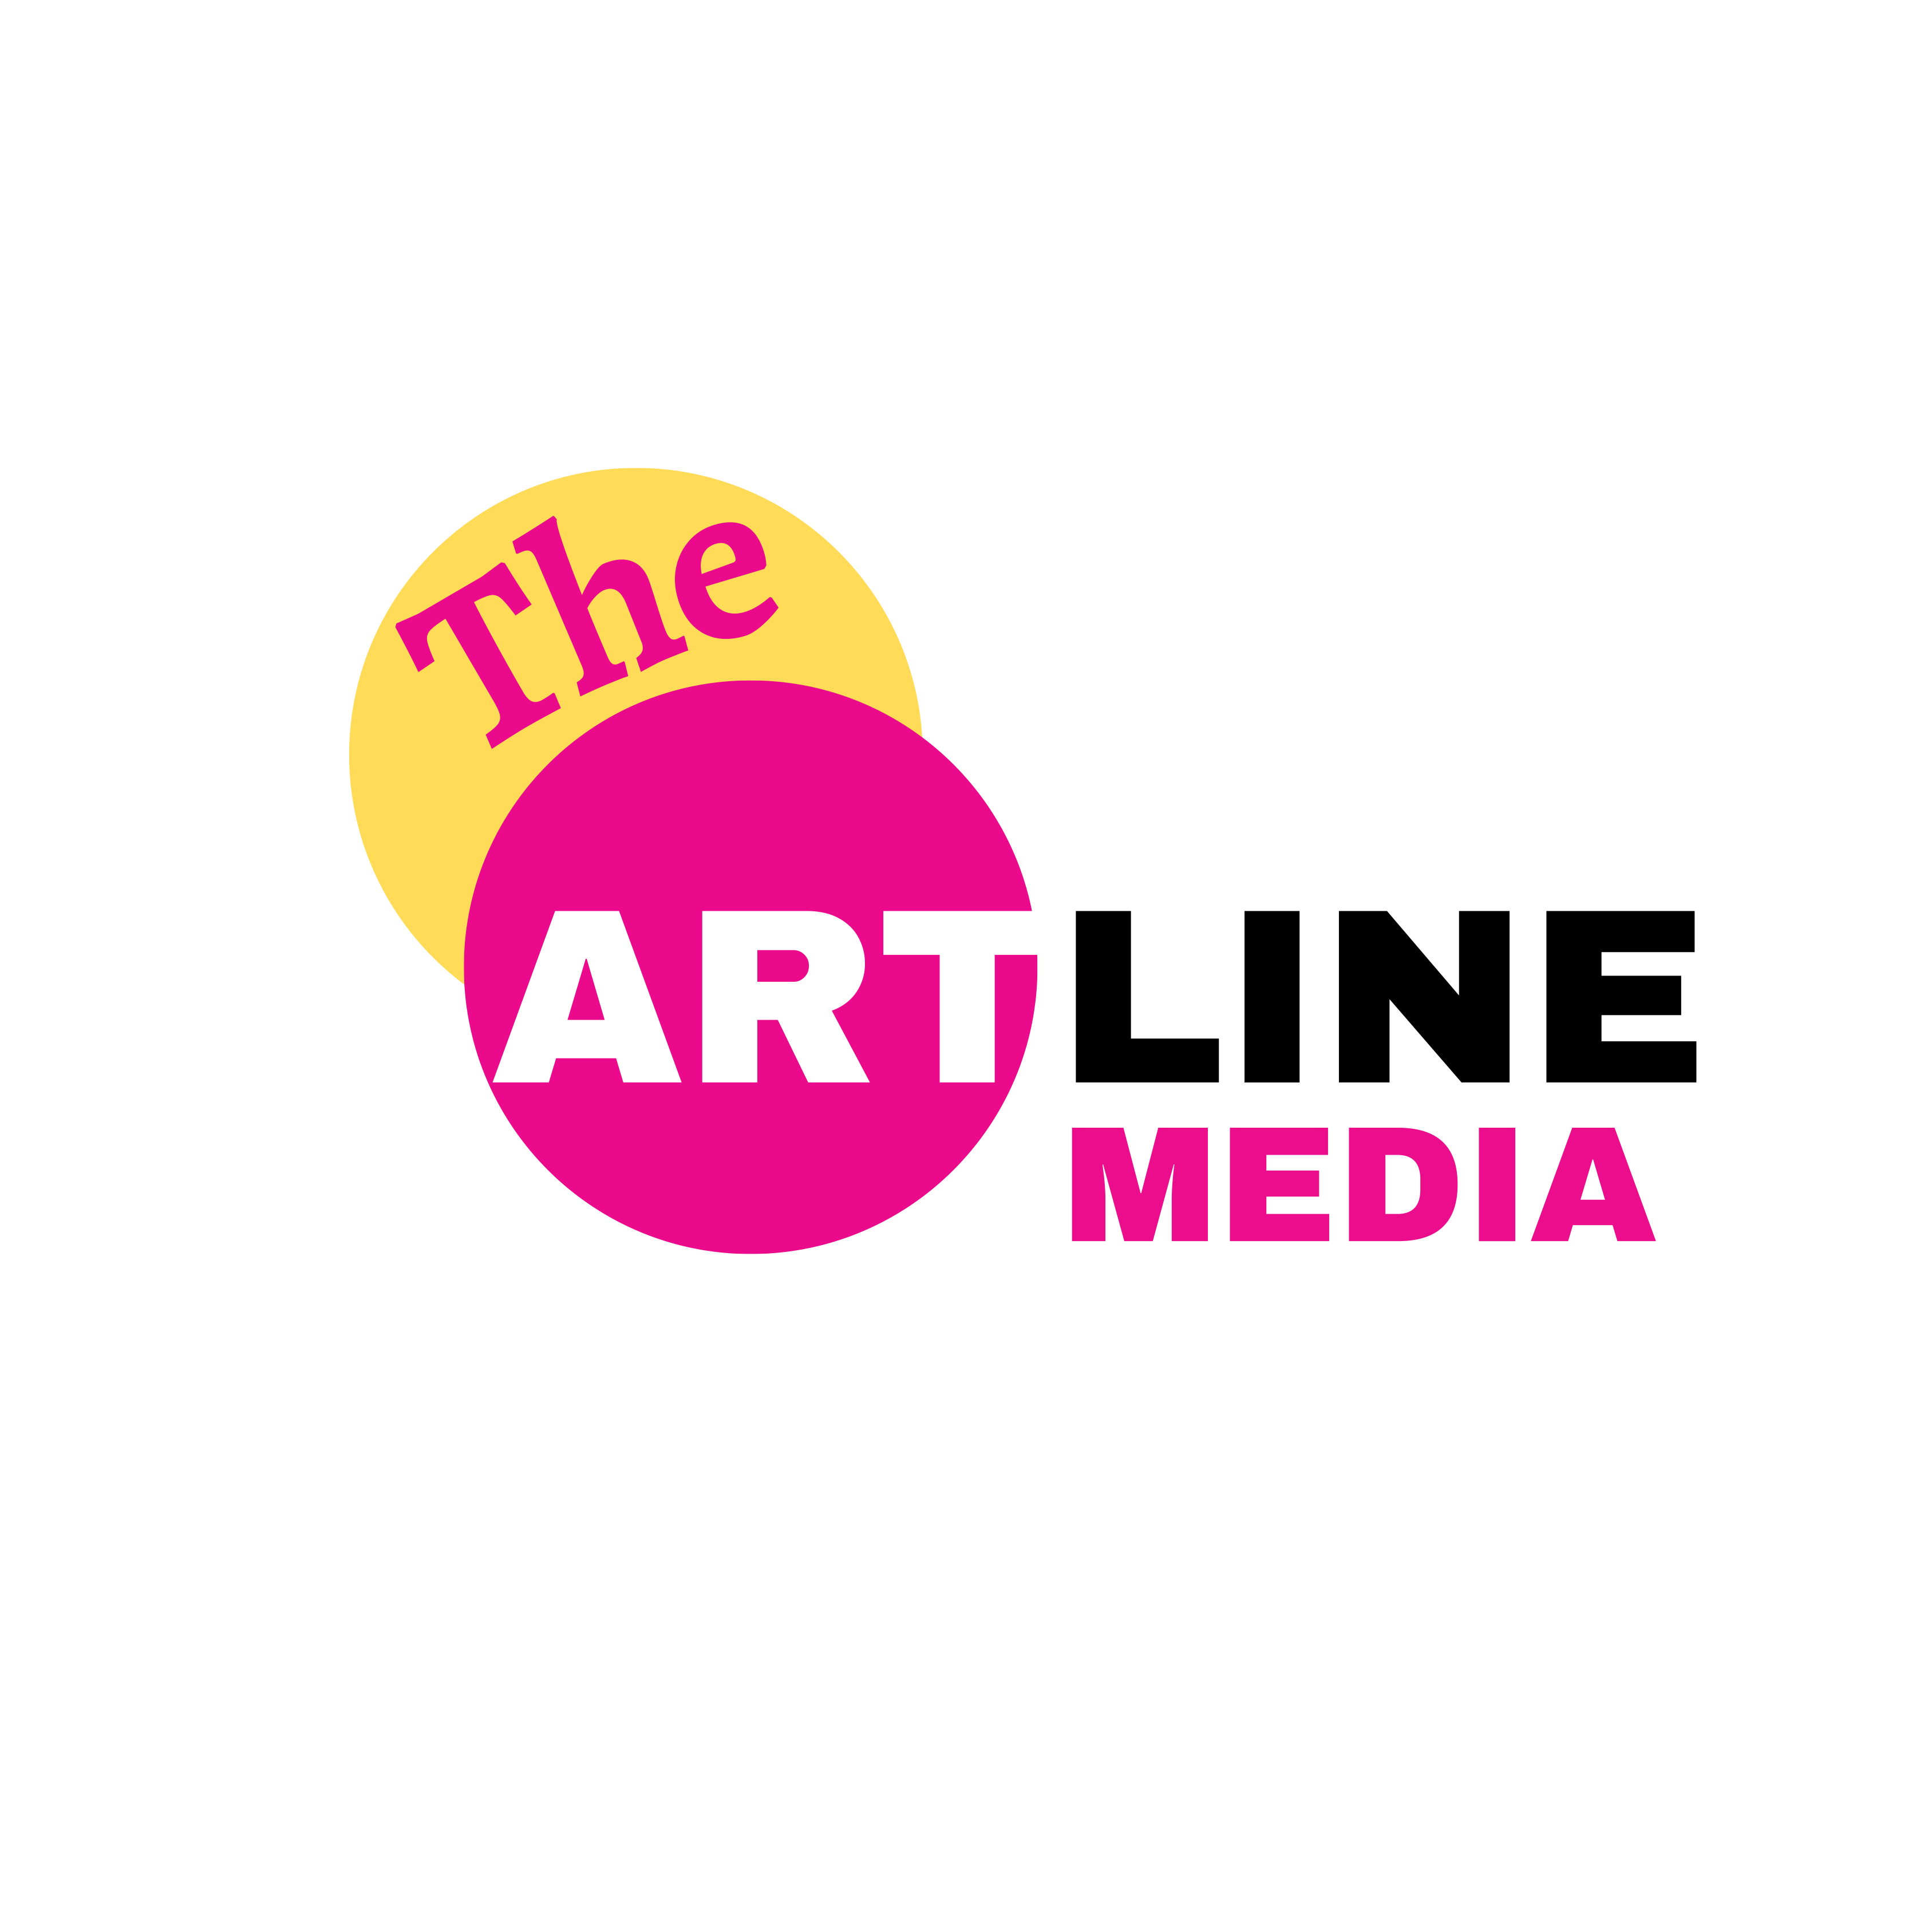 The Artline Media